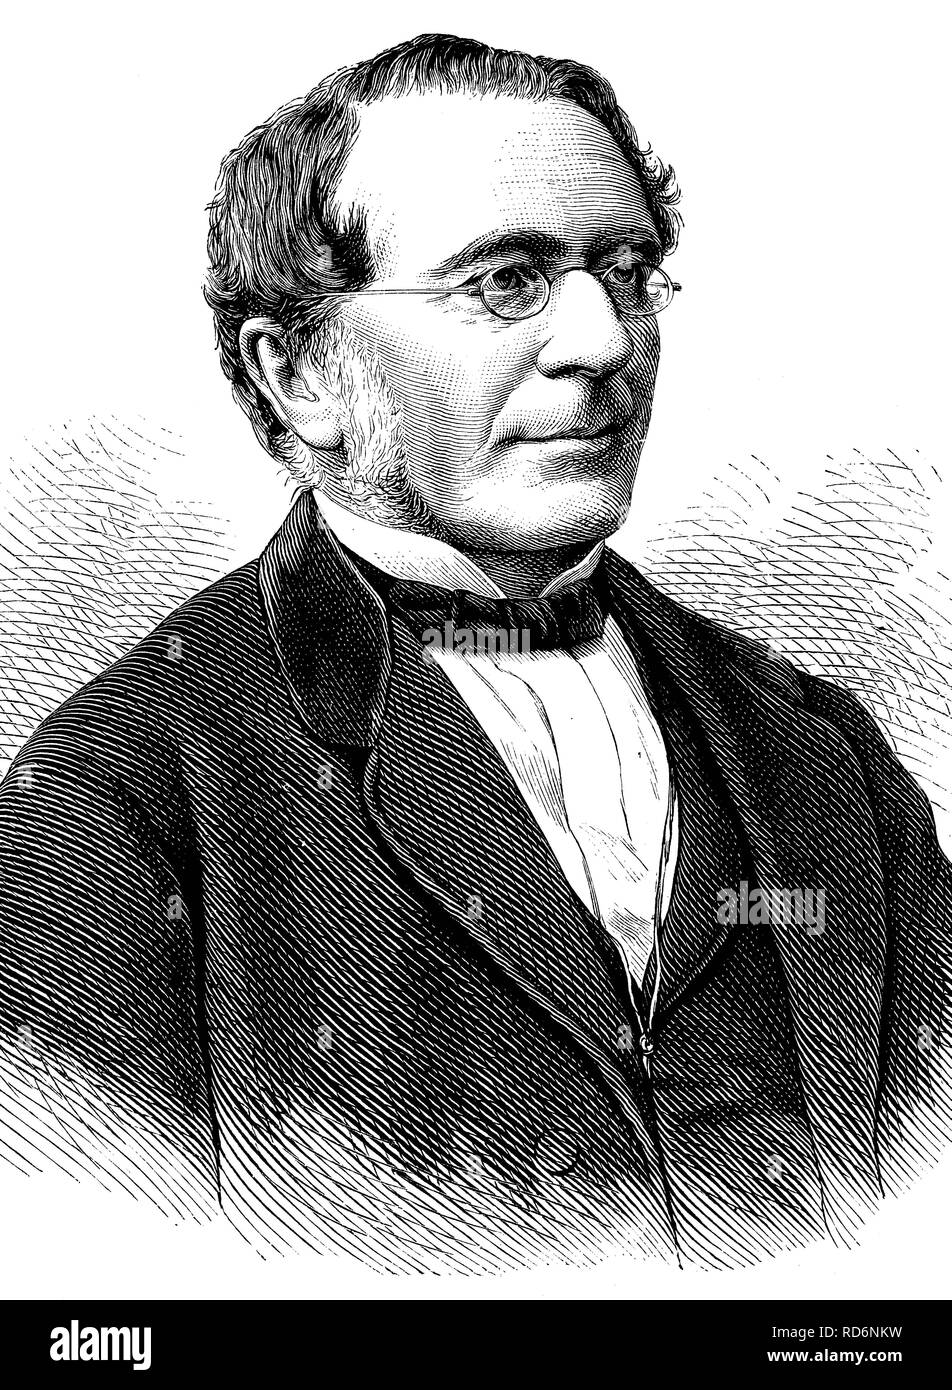 Rudolph von Ihering, également Rudolph von Jhering, 1818-1892, avocat allemand, illustration historique, vers 1886 Banque D'Images